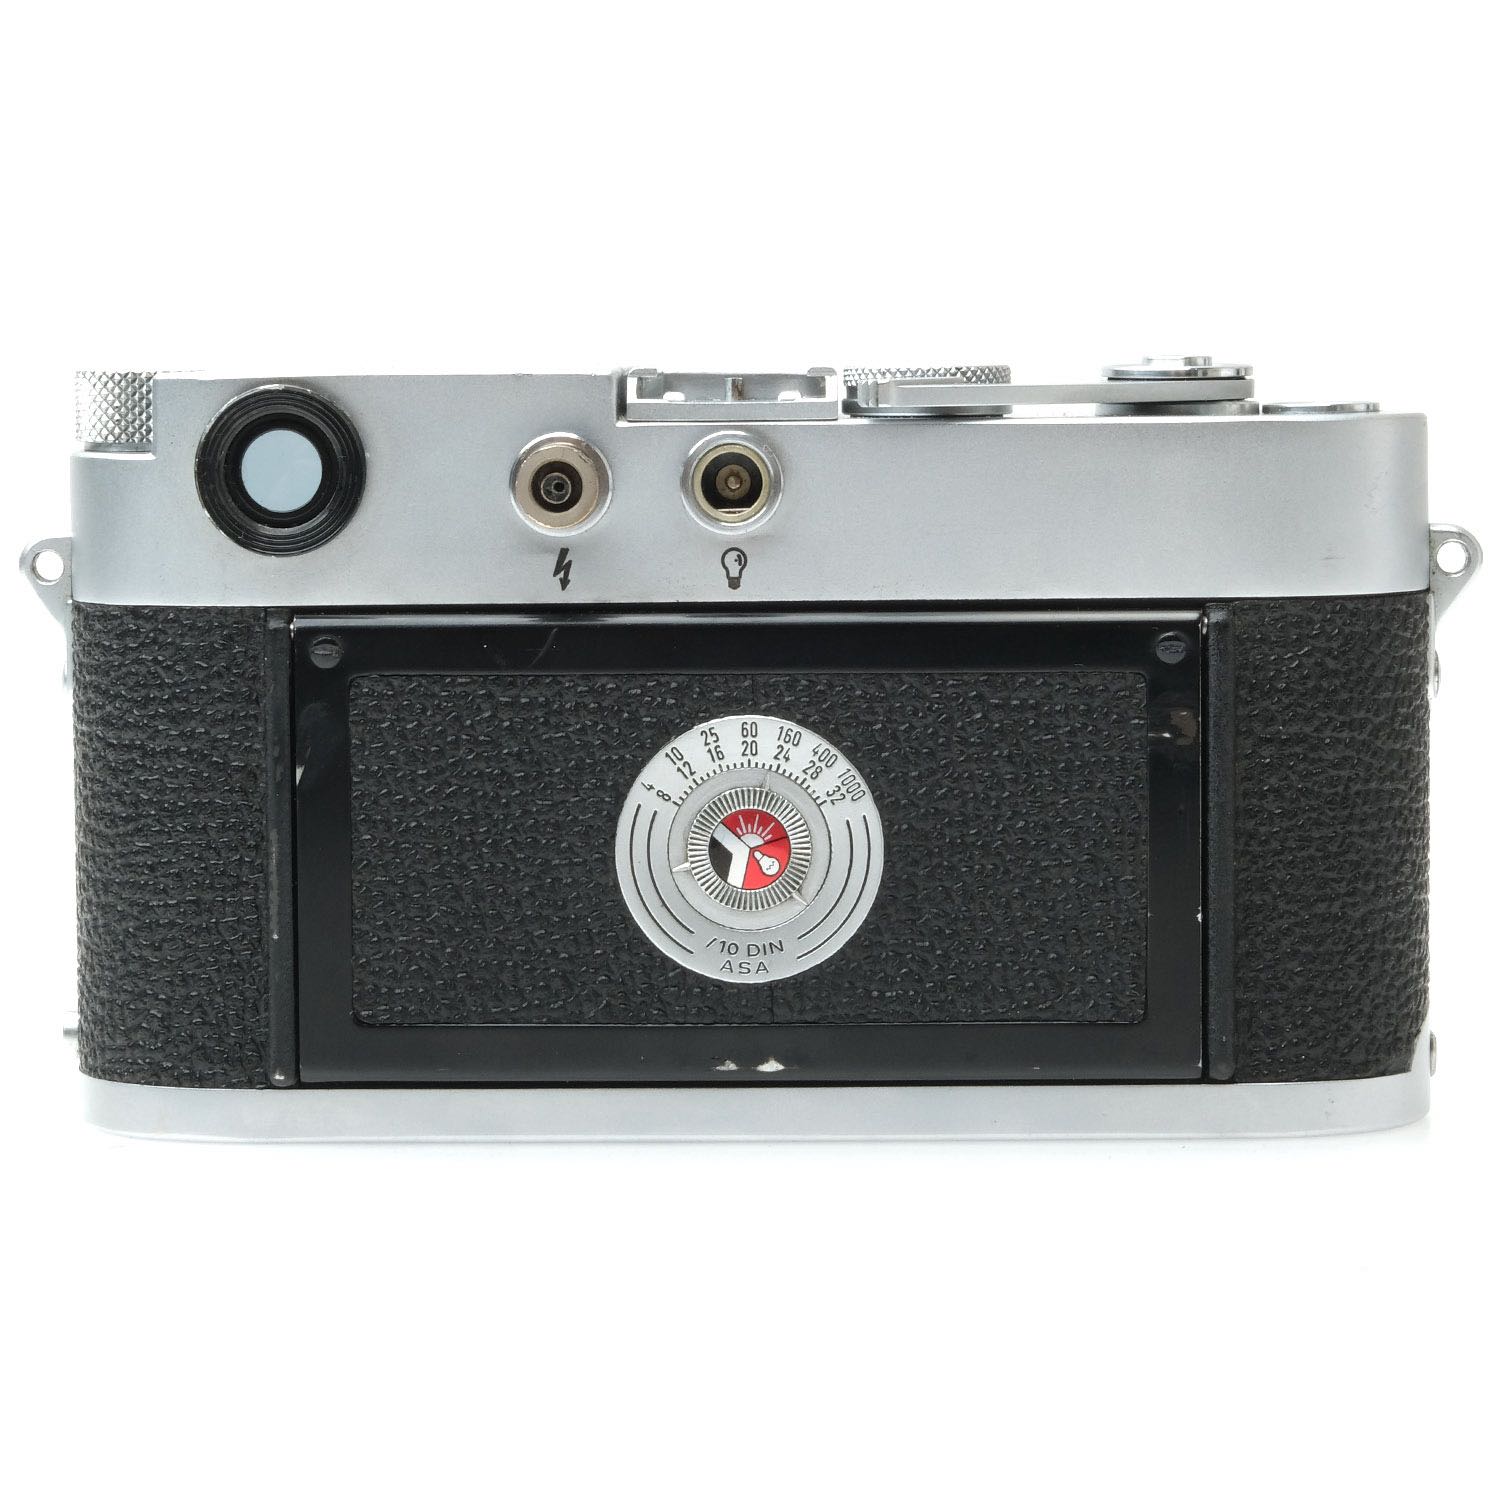 Leica M3 DS 902406 DAG overhaul